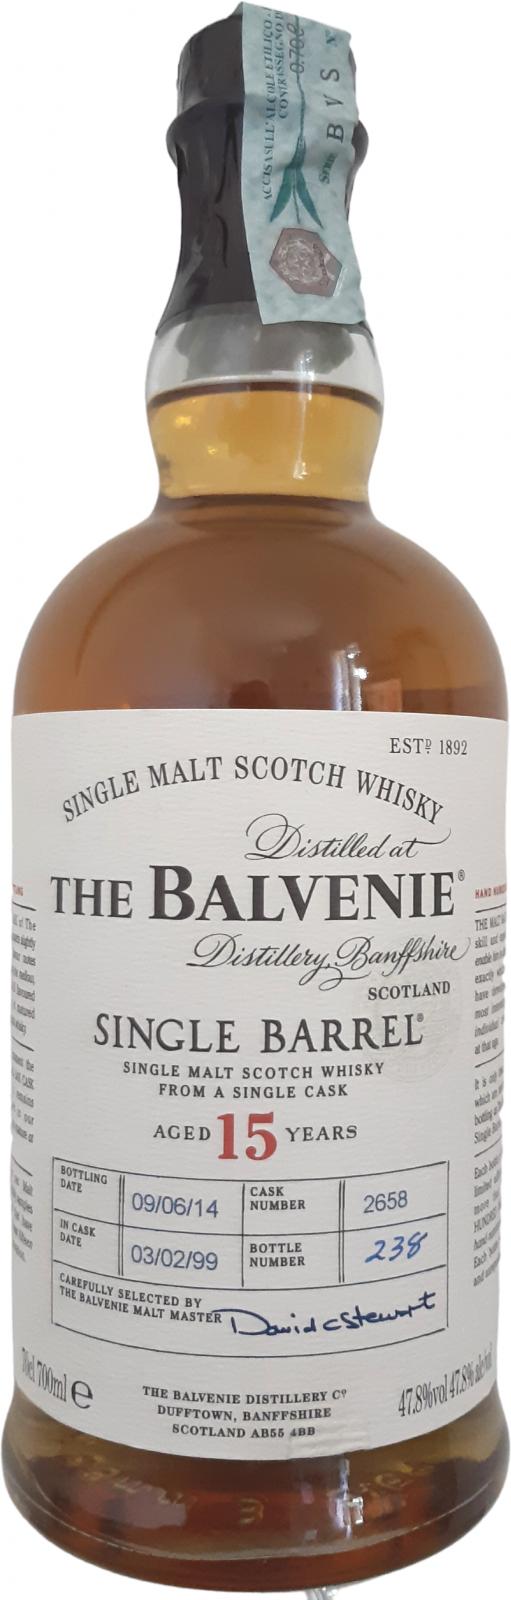 Balvenie 15yo Single Barrel Traditional oak cask #2658 47.8% 700ml